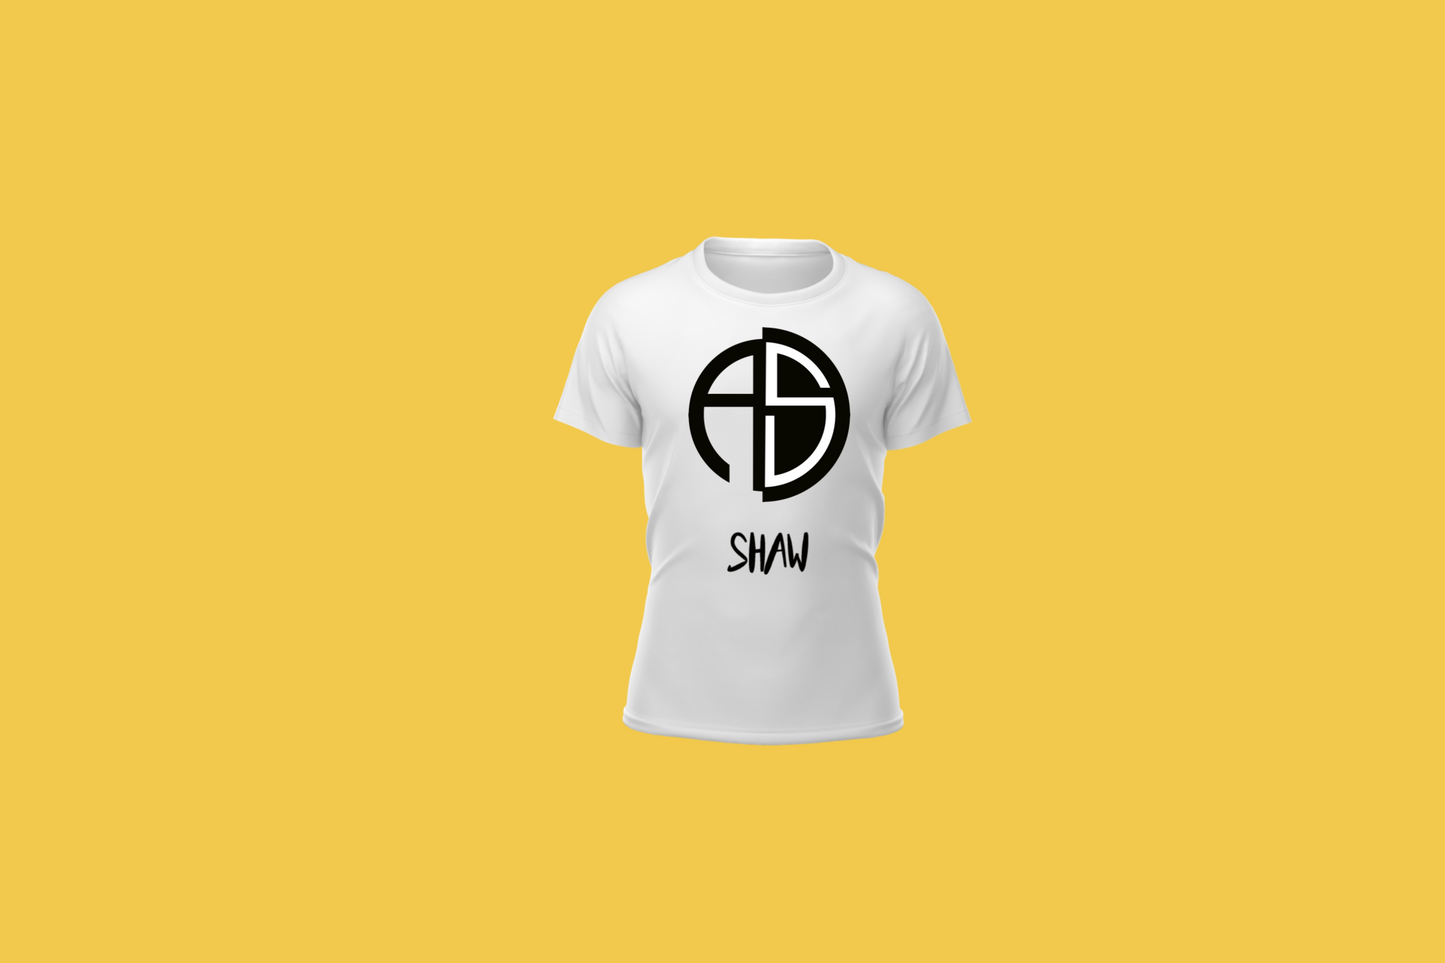 AS23 Short Sleeve Emblem Shirt with Shaw print